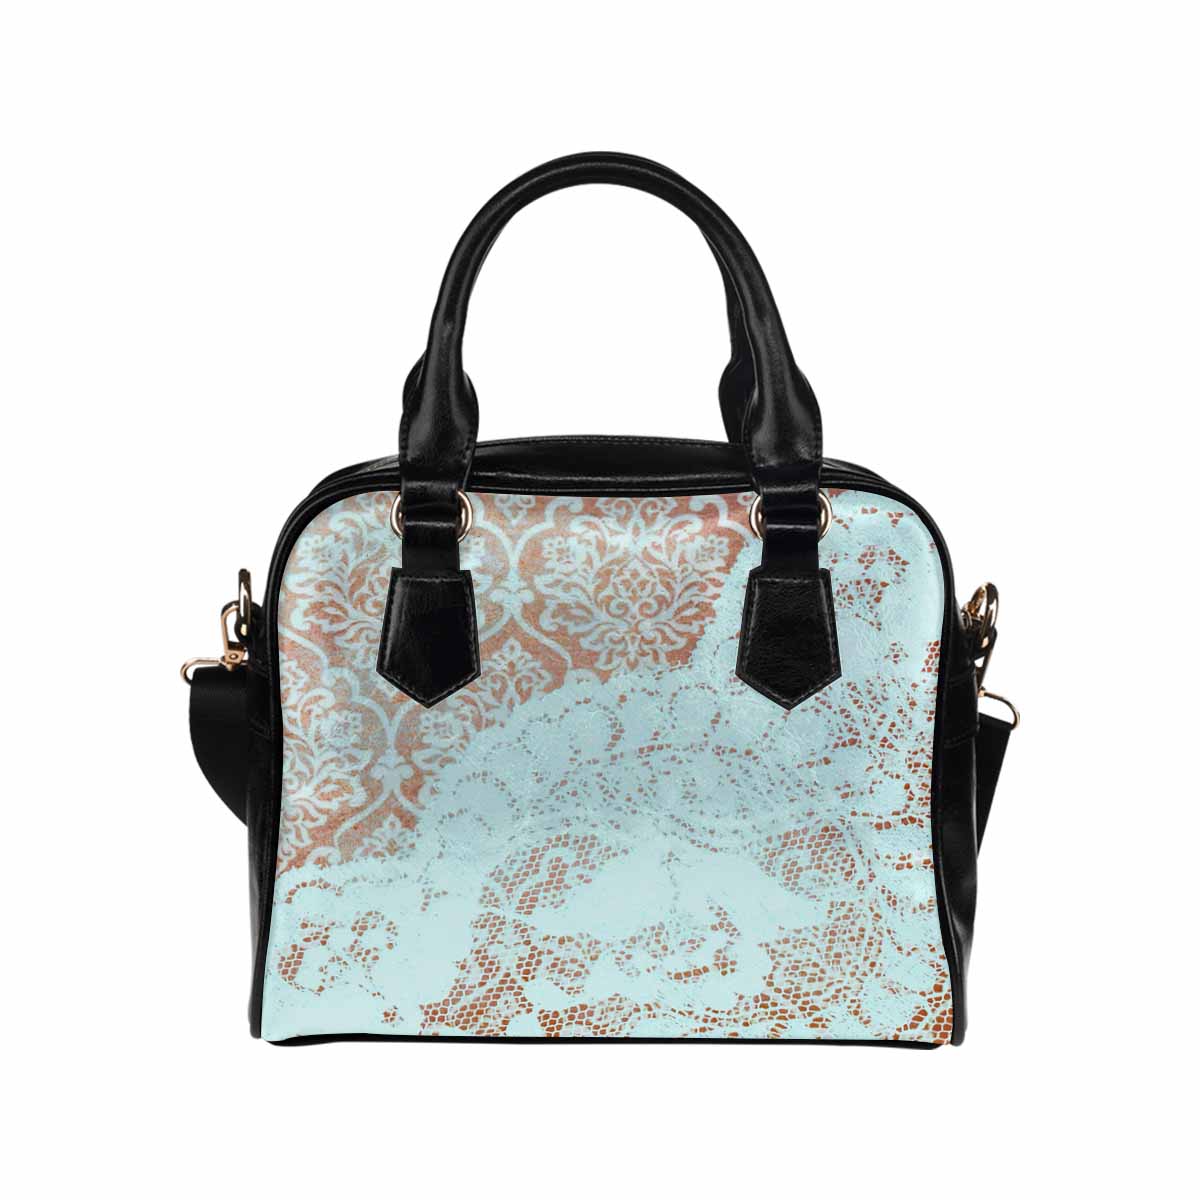 Victorian lace print, cute handbag, Mod 19163453, design 23